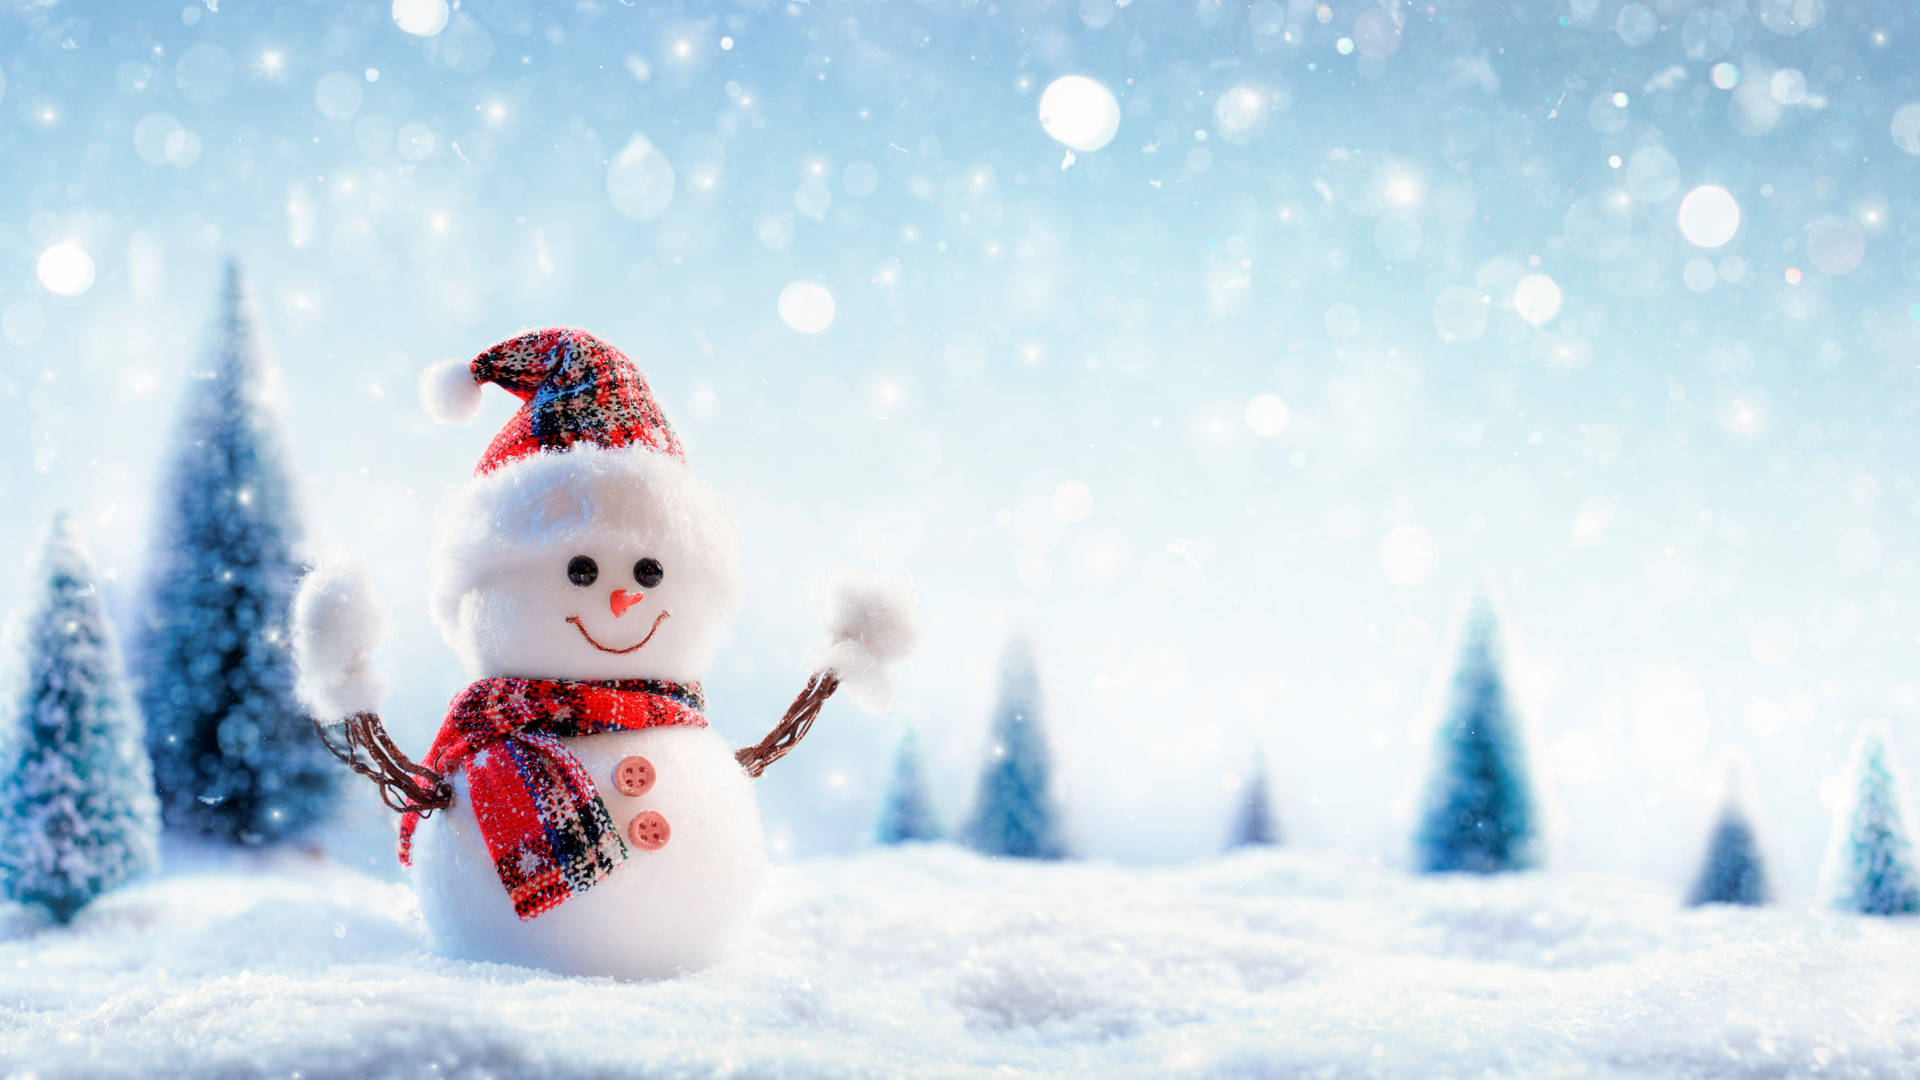 Snowy Christmas Snowman Wallpaper